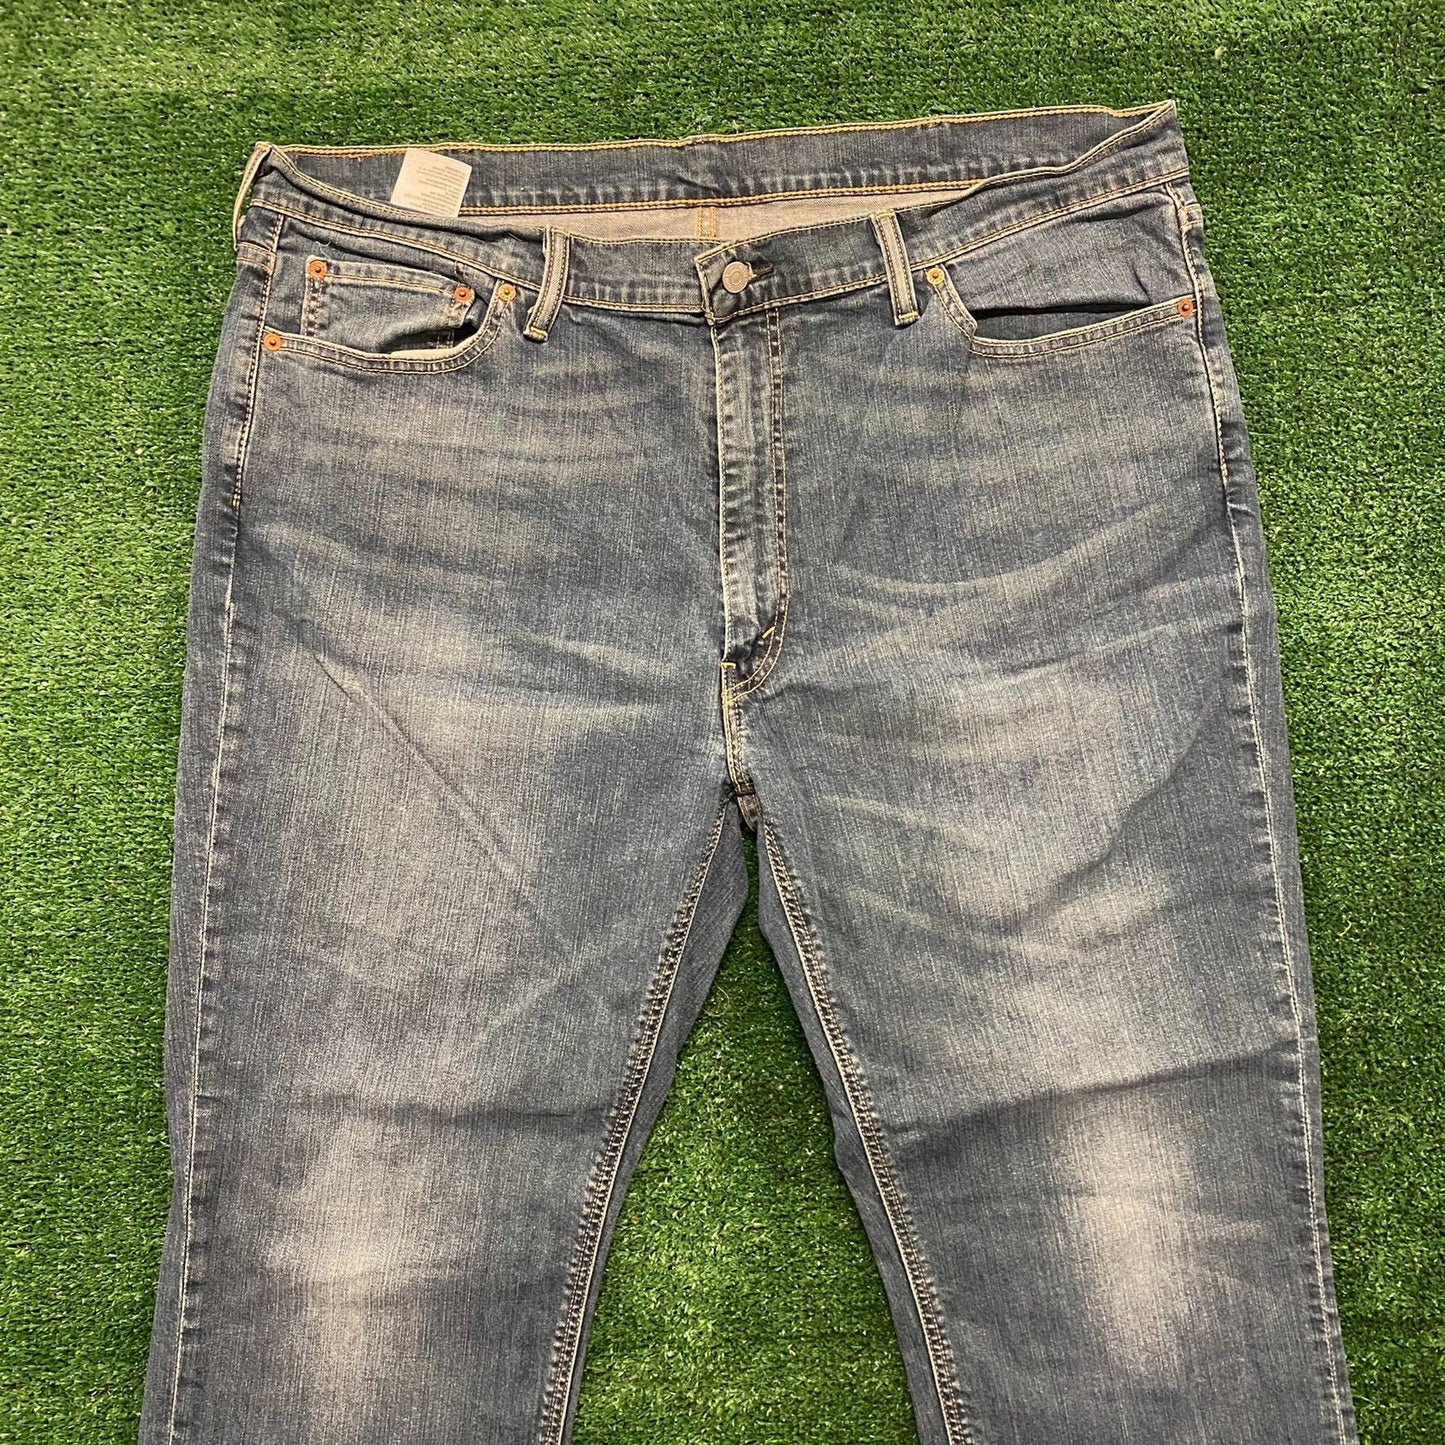 Levi's 541 Tapered Athletic Fit Vintage Denim Jeans Pants